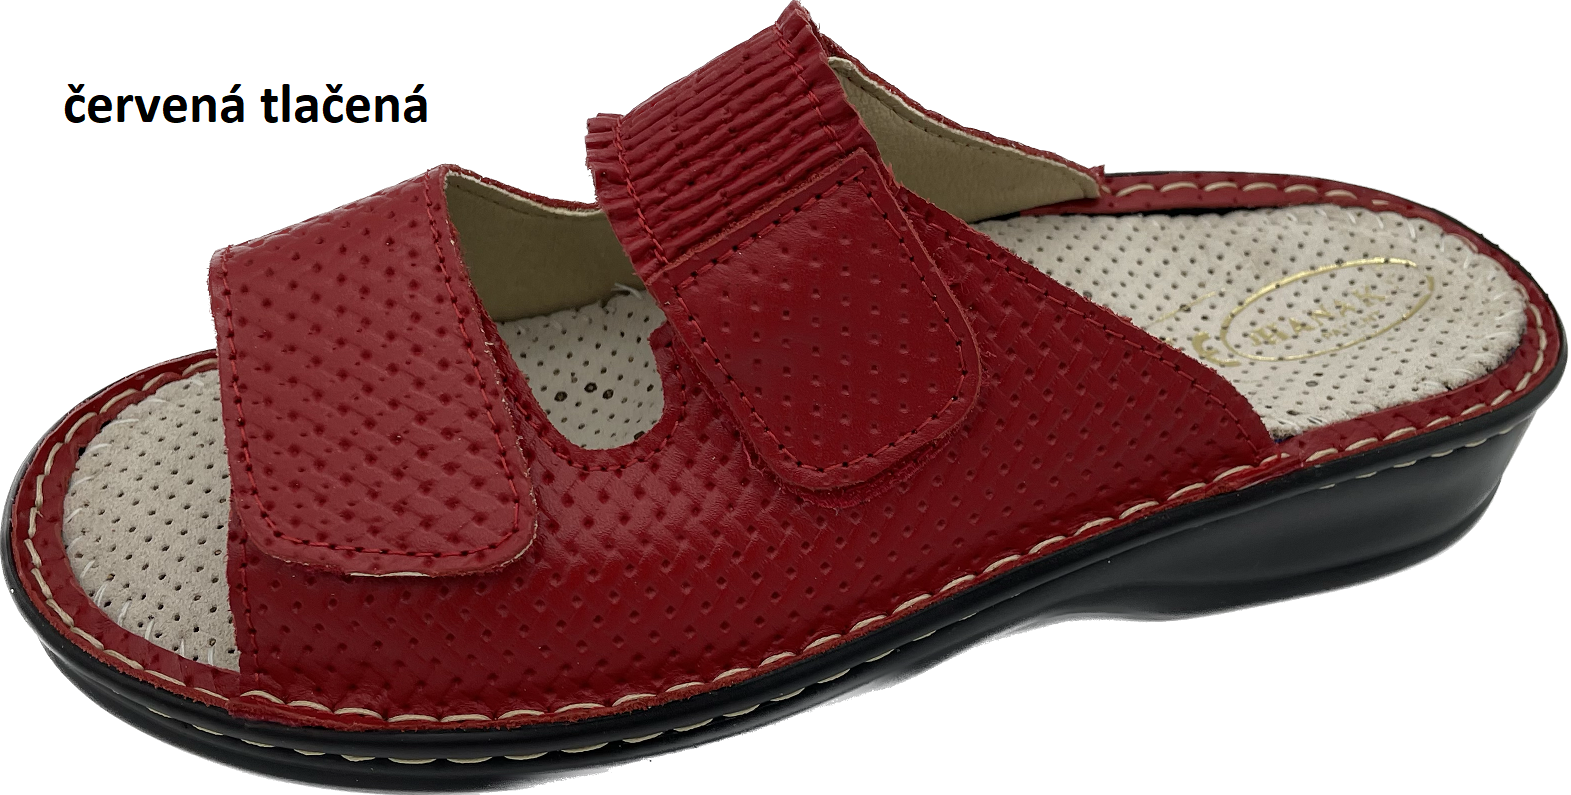 Boty Hanák vzor 304 - černá podešev Barva usně: červená tlačená, Velikosti obuvi: 40